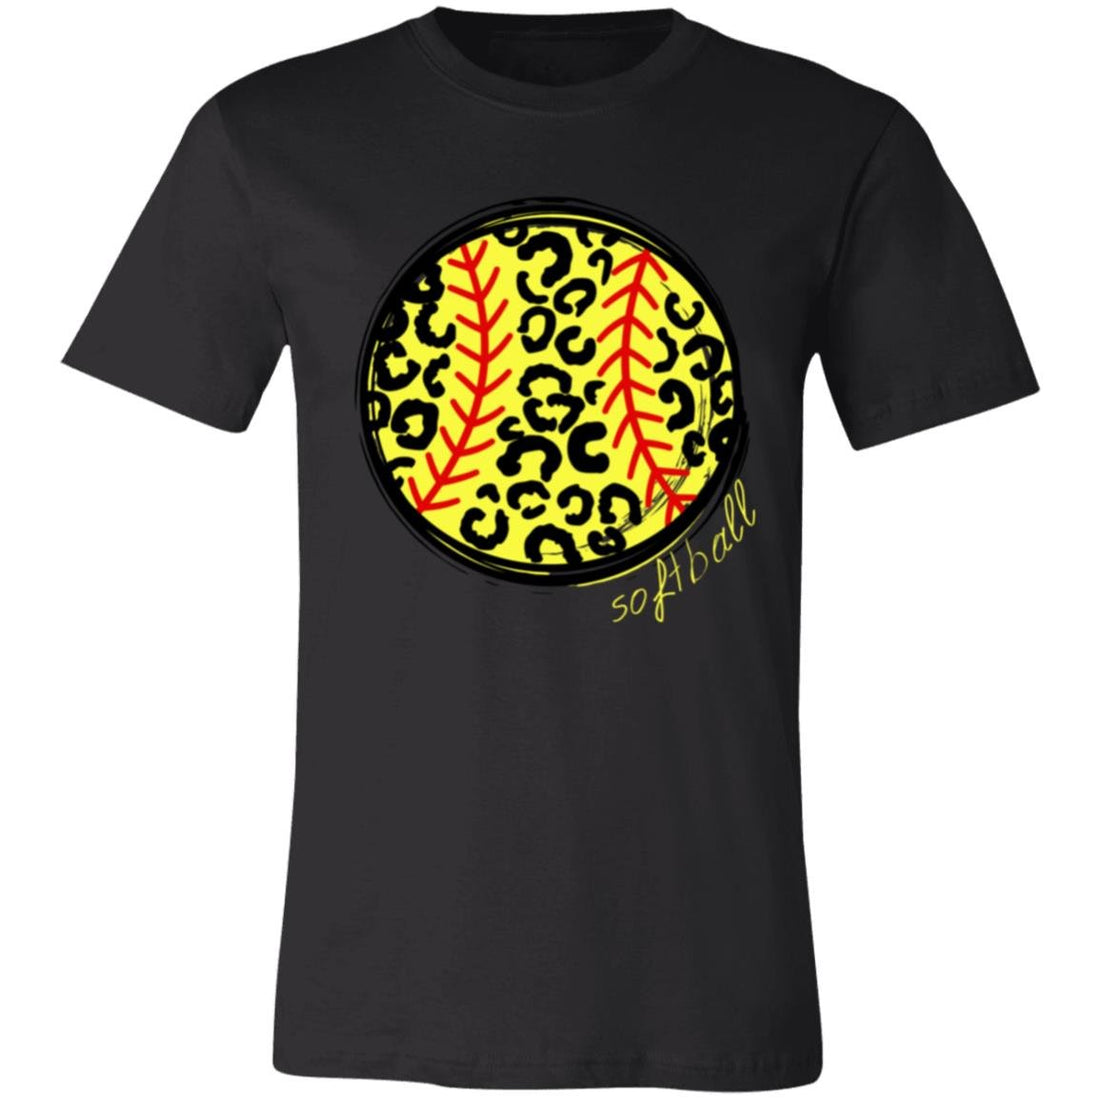 Softball Cheetah Short-Sleeve T-Shirt - T-Shirts - Positively Sassy - Softball Cheetah Short-Sleeve T-Shirt